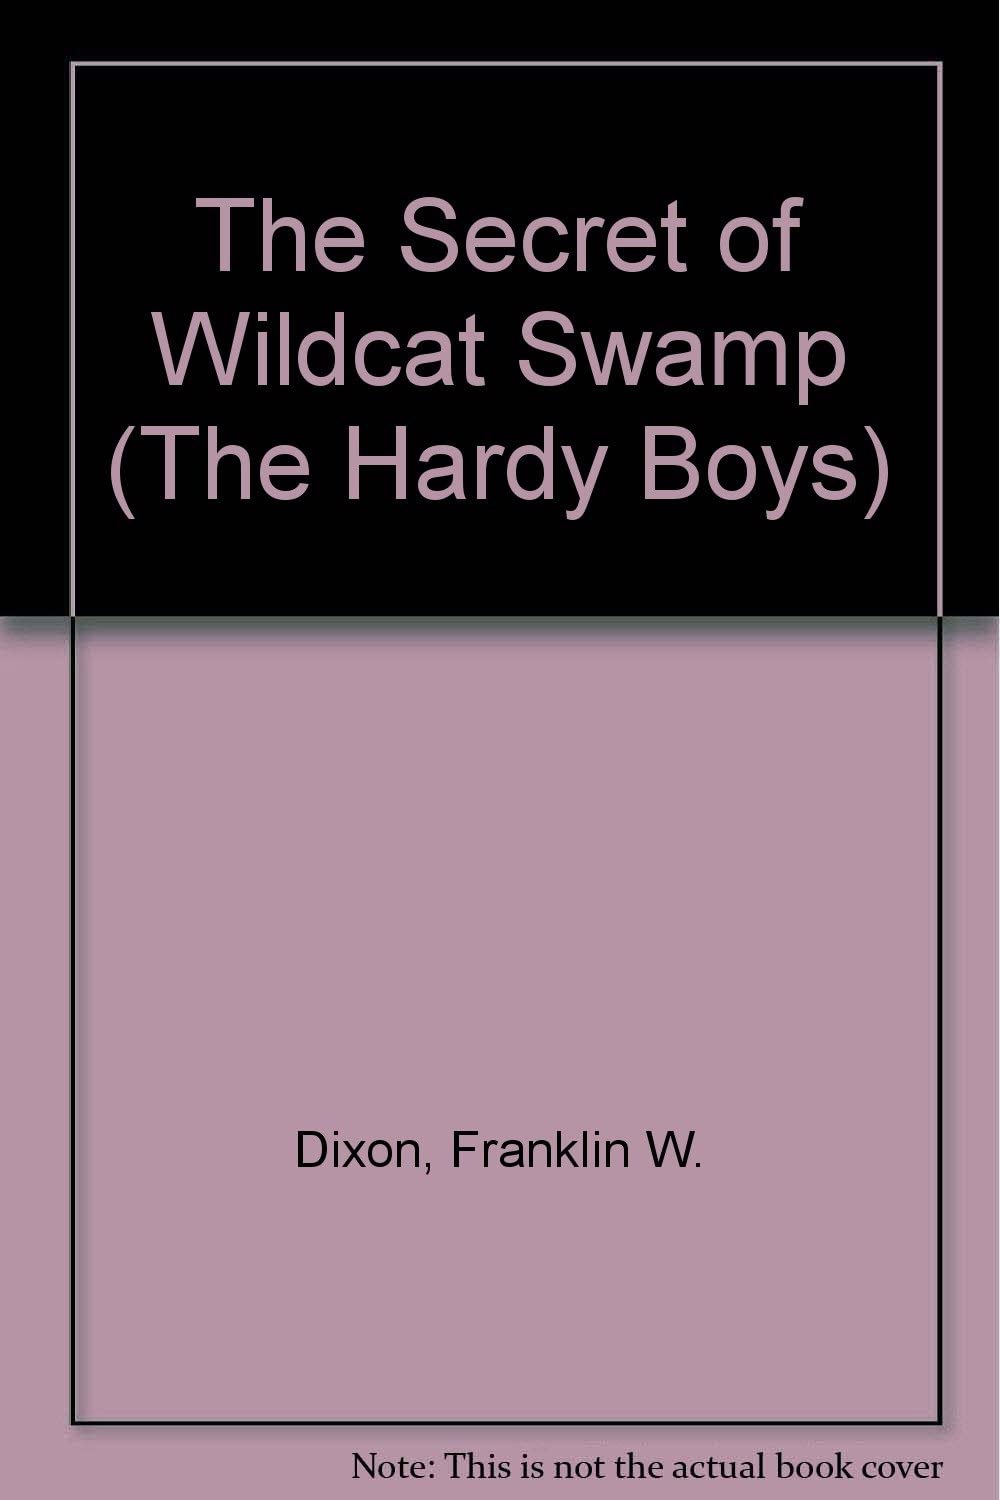 The Secret of Wildcat Swamp (Hardy Boys, Book 31)